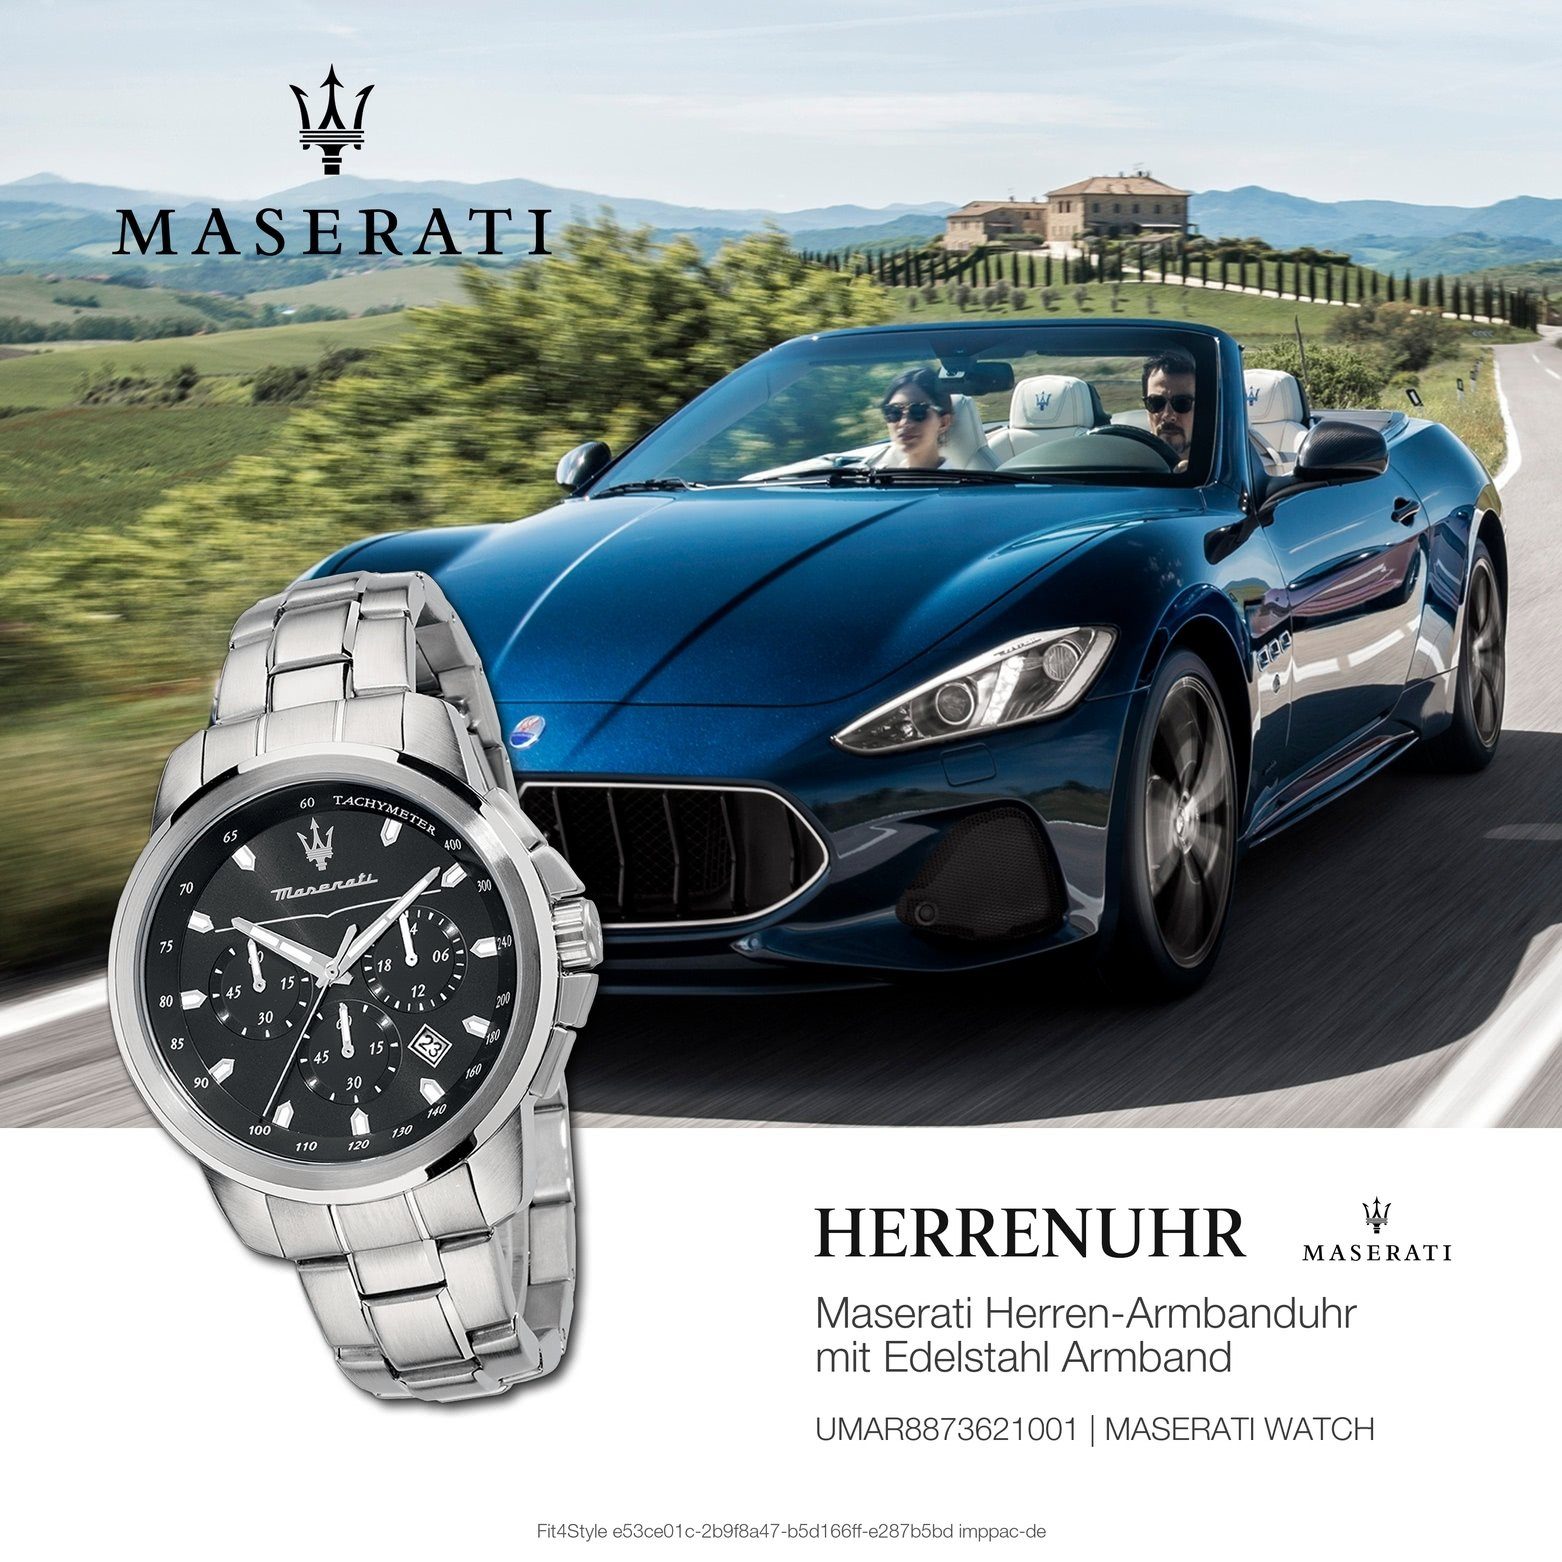 Maserati Herren groß silber MASERATI Chronograph 52x44mm) Edelstahlarmband, Chronograph, Herrenuhr Made-In rund, Uhr Italy (ca. schwarz,